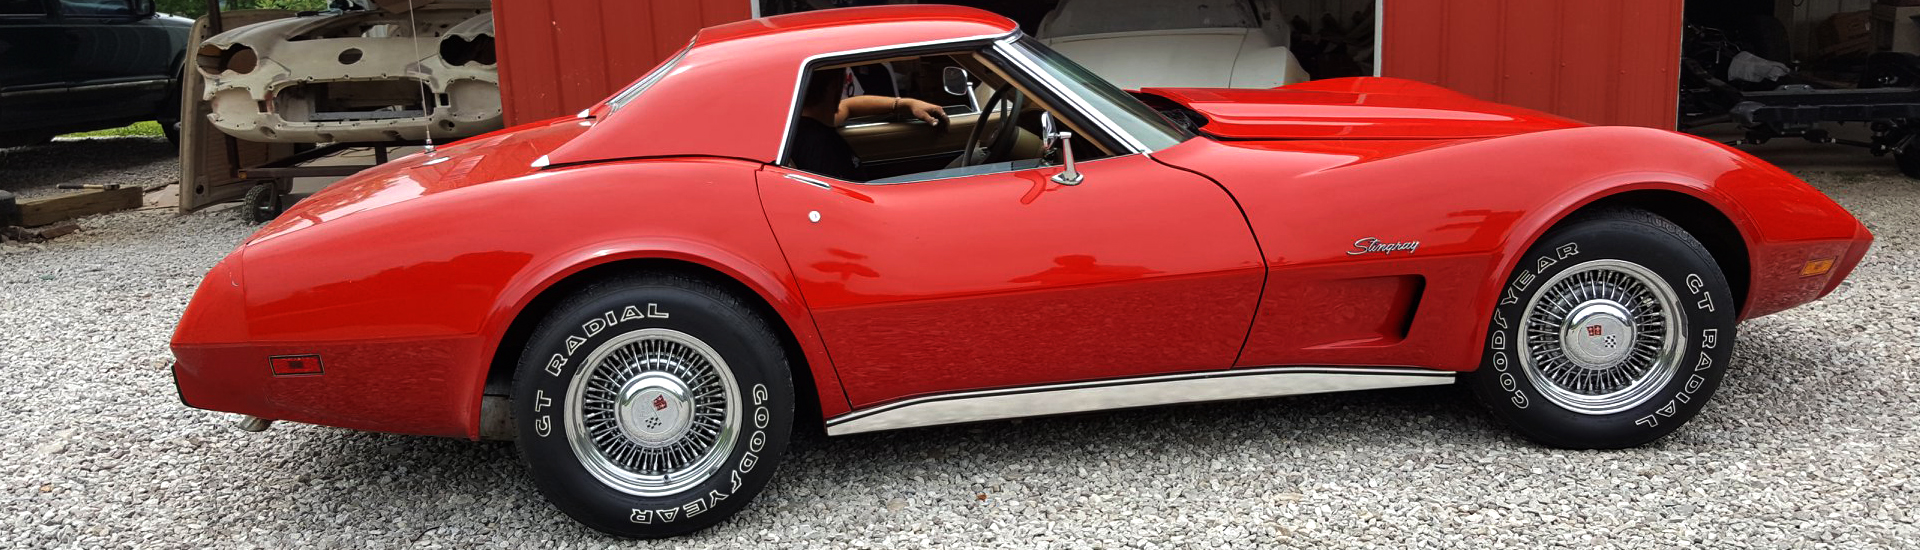 Red 1970 Corvette